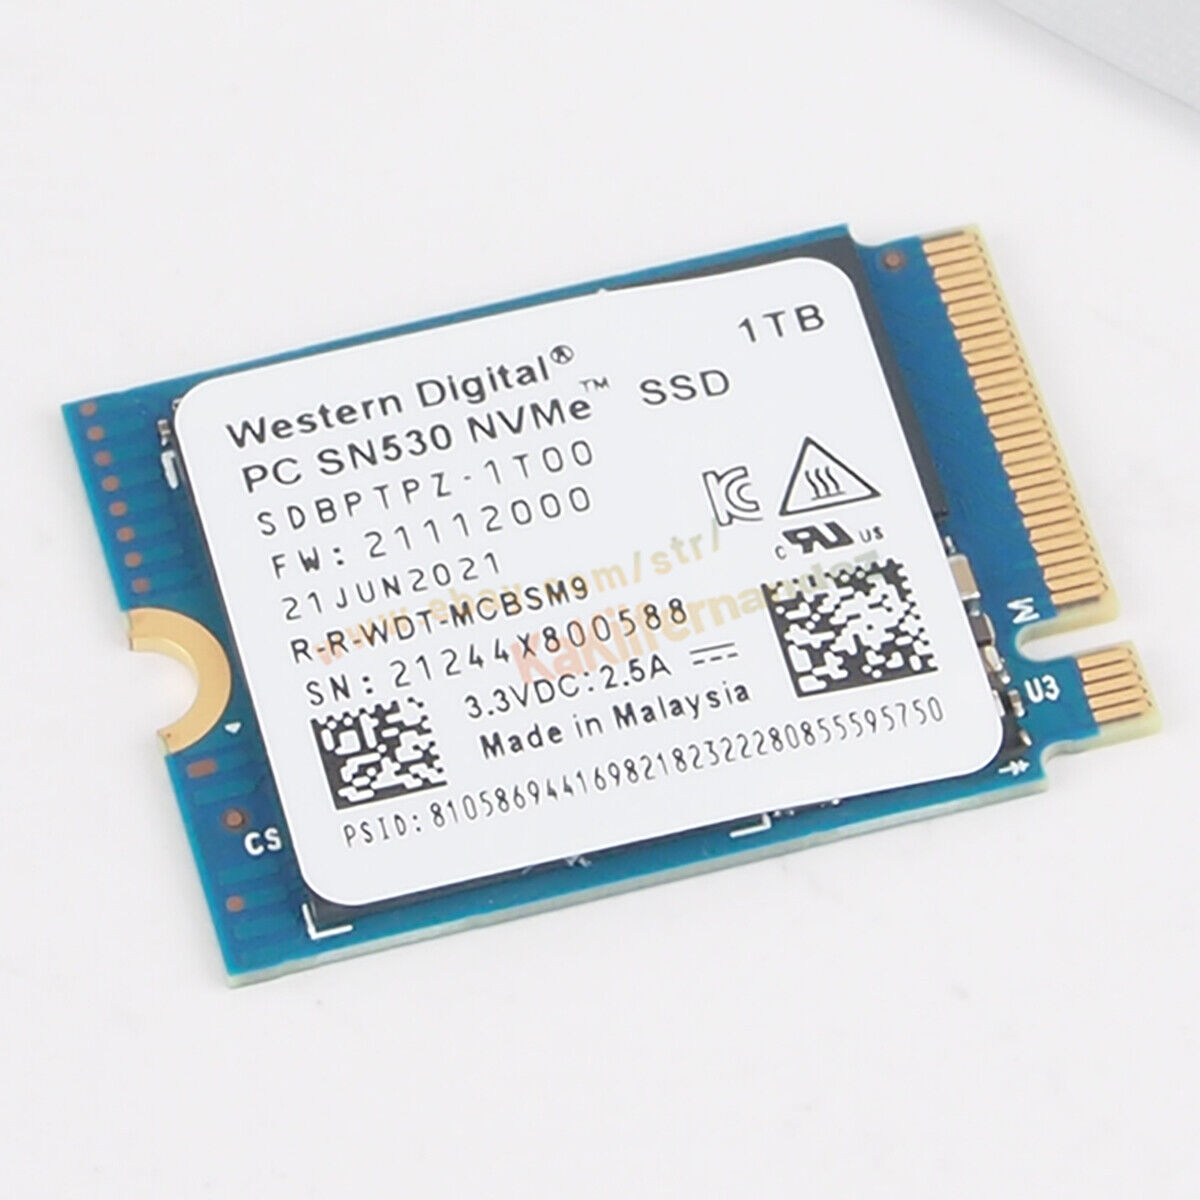 Original WD SN530 1tb/512g NVMe SSD M.2 2230 For Microsoft Surface Pro X